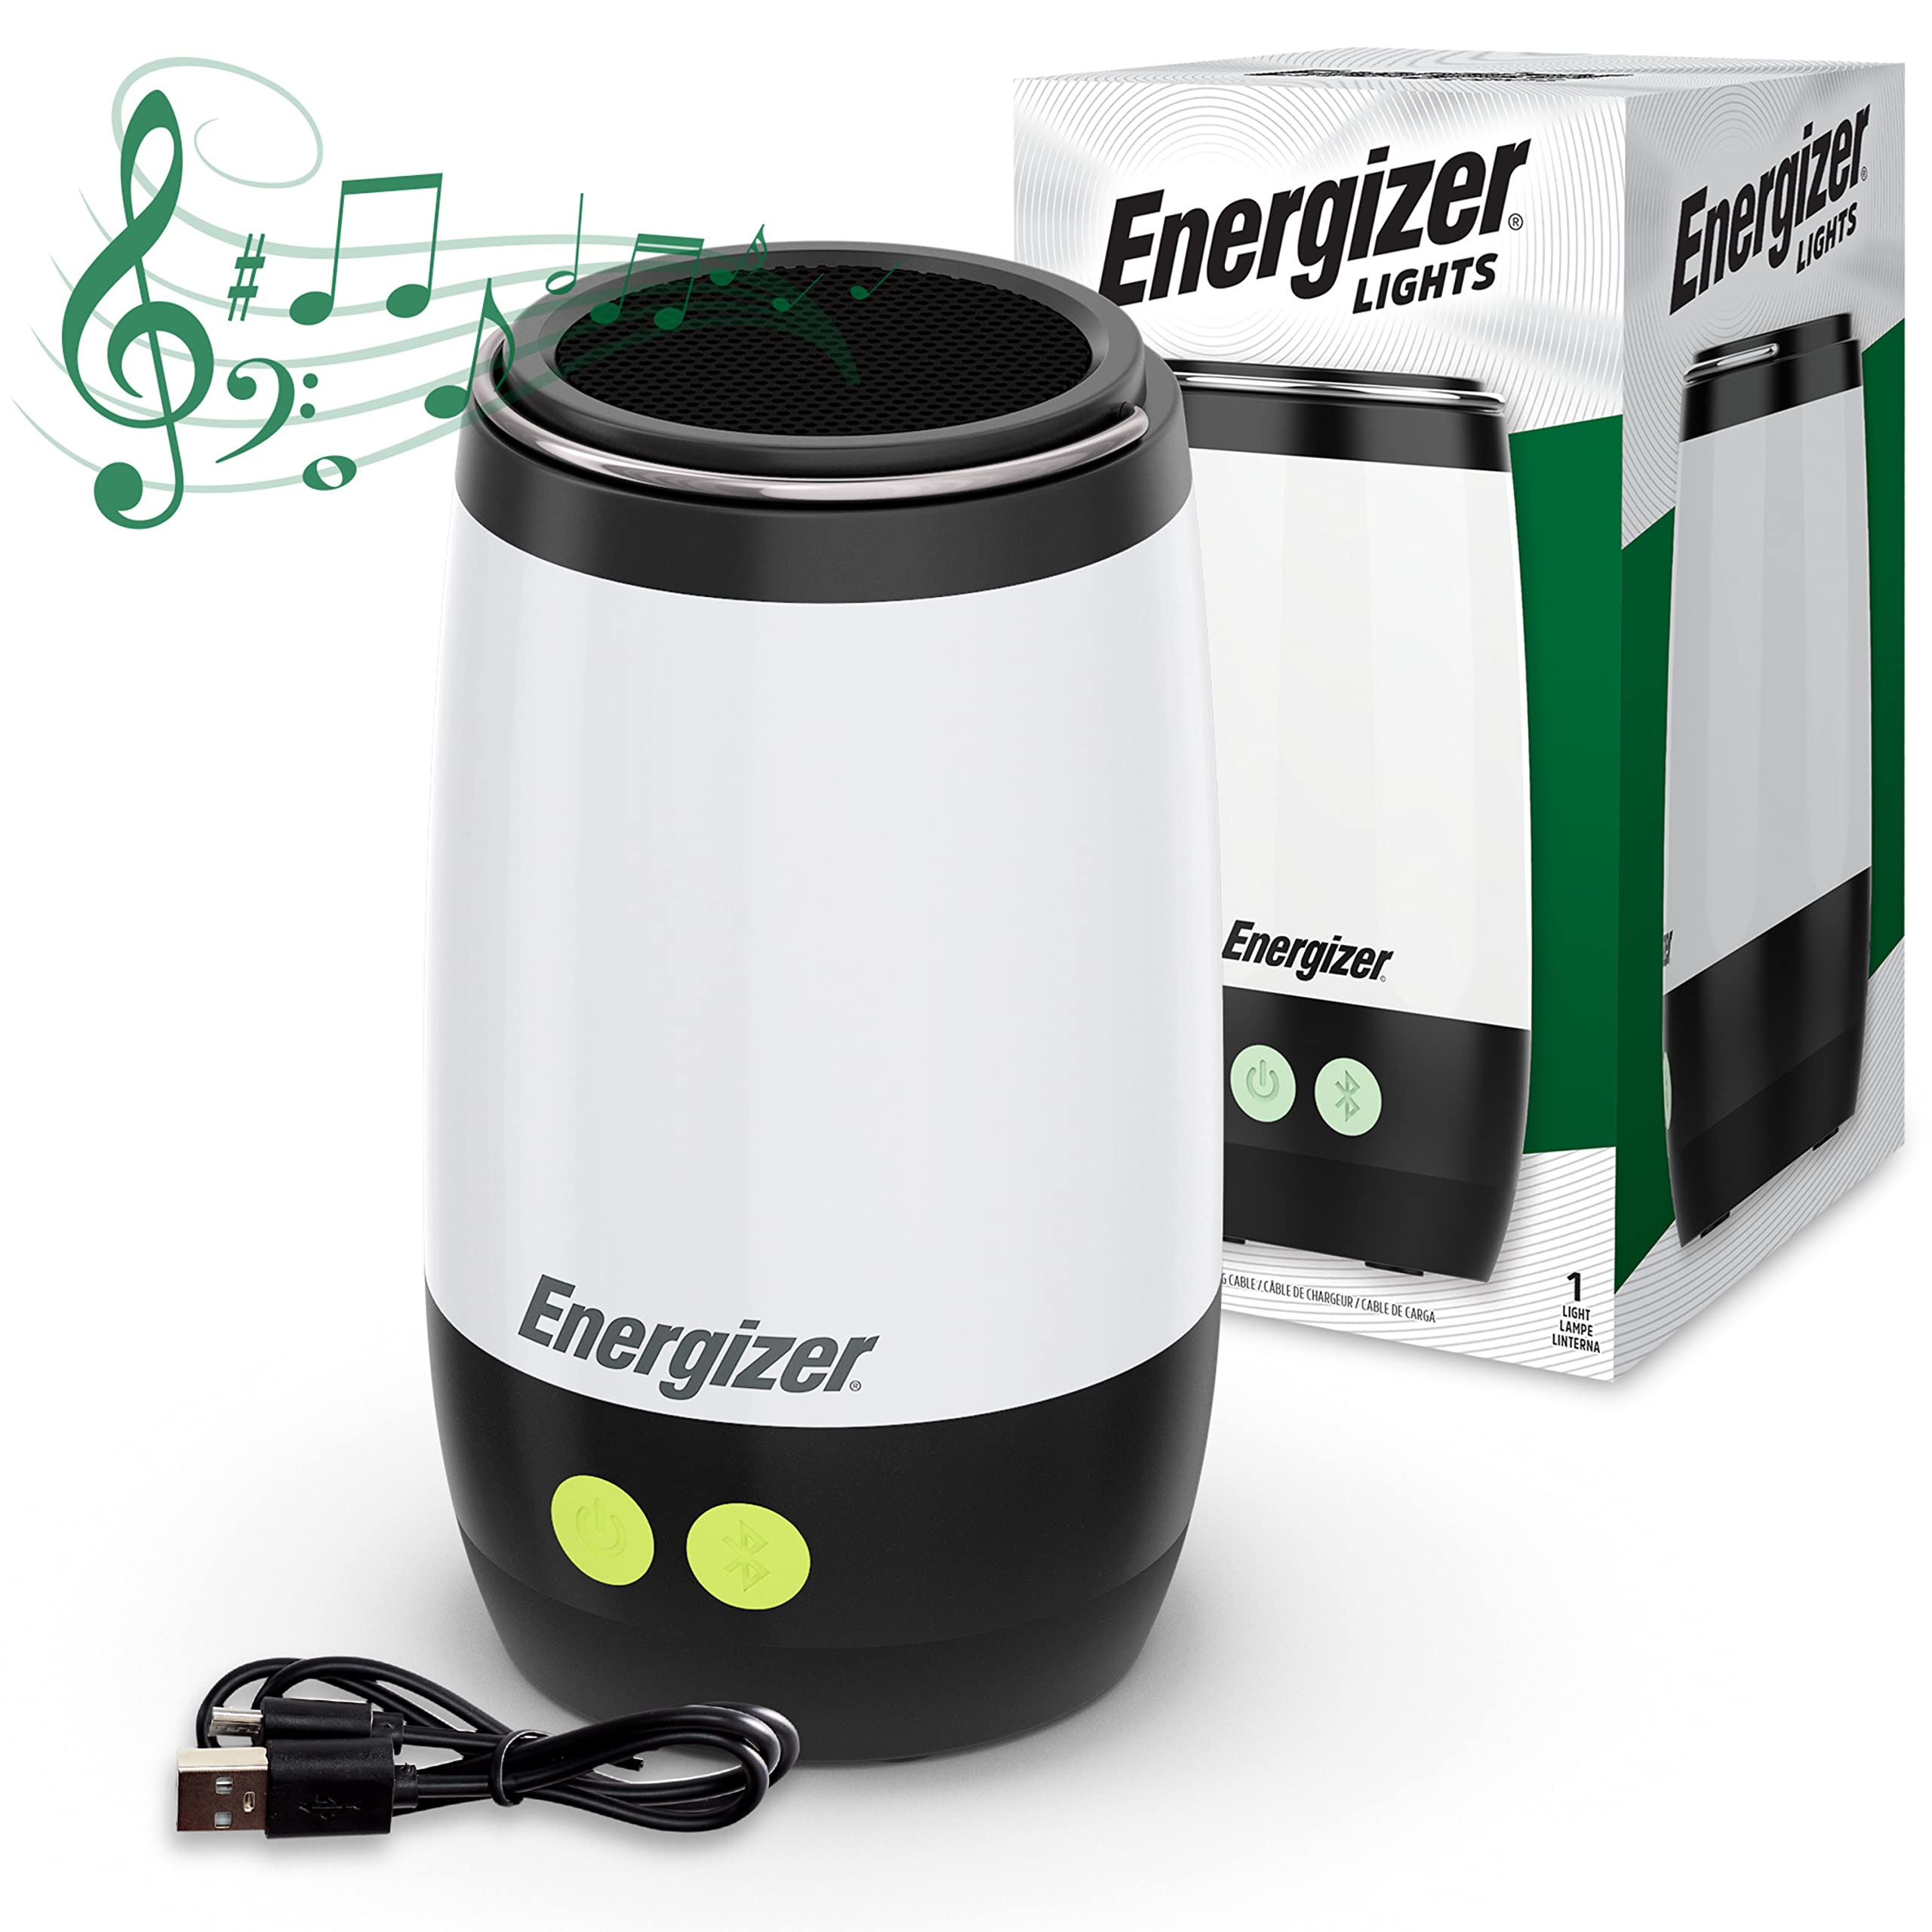 Energizer Lantern + Bluetooth Speaker $7.70 + Free Ship w/Prime or on orders $35+